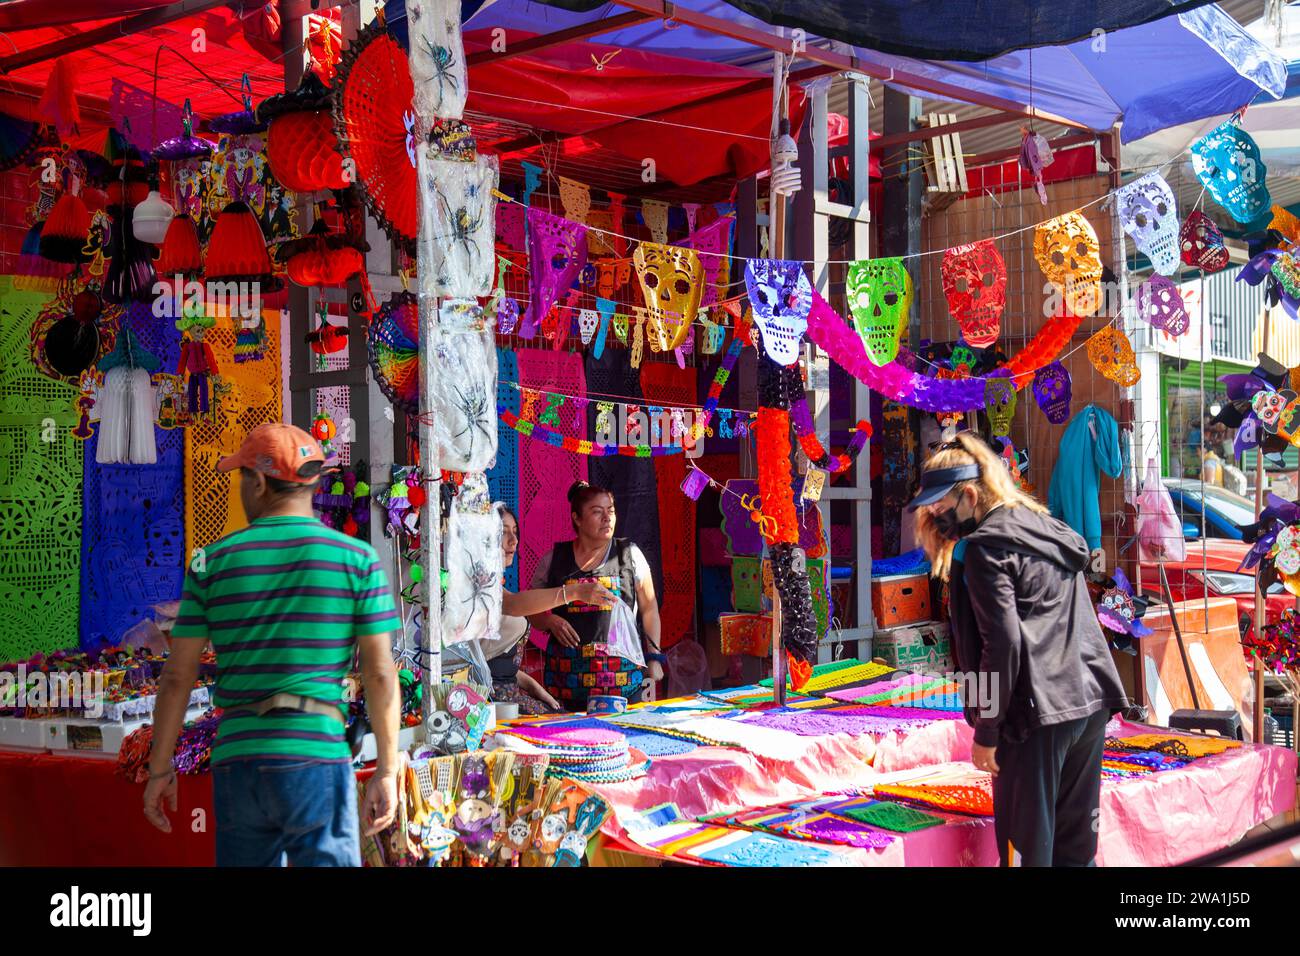 Papel Picado (Day of the Dead Dekoration) Stand am Jamaica Market, Mexico City, Mexiko Stockfoto